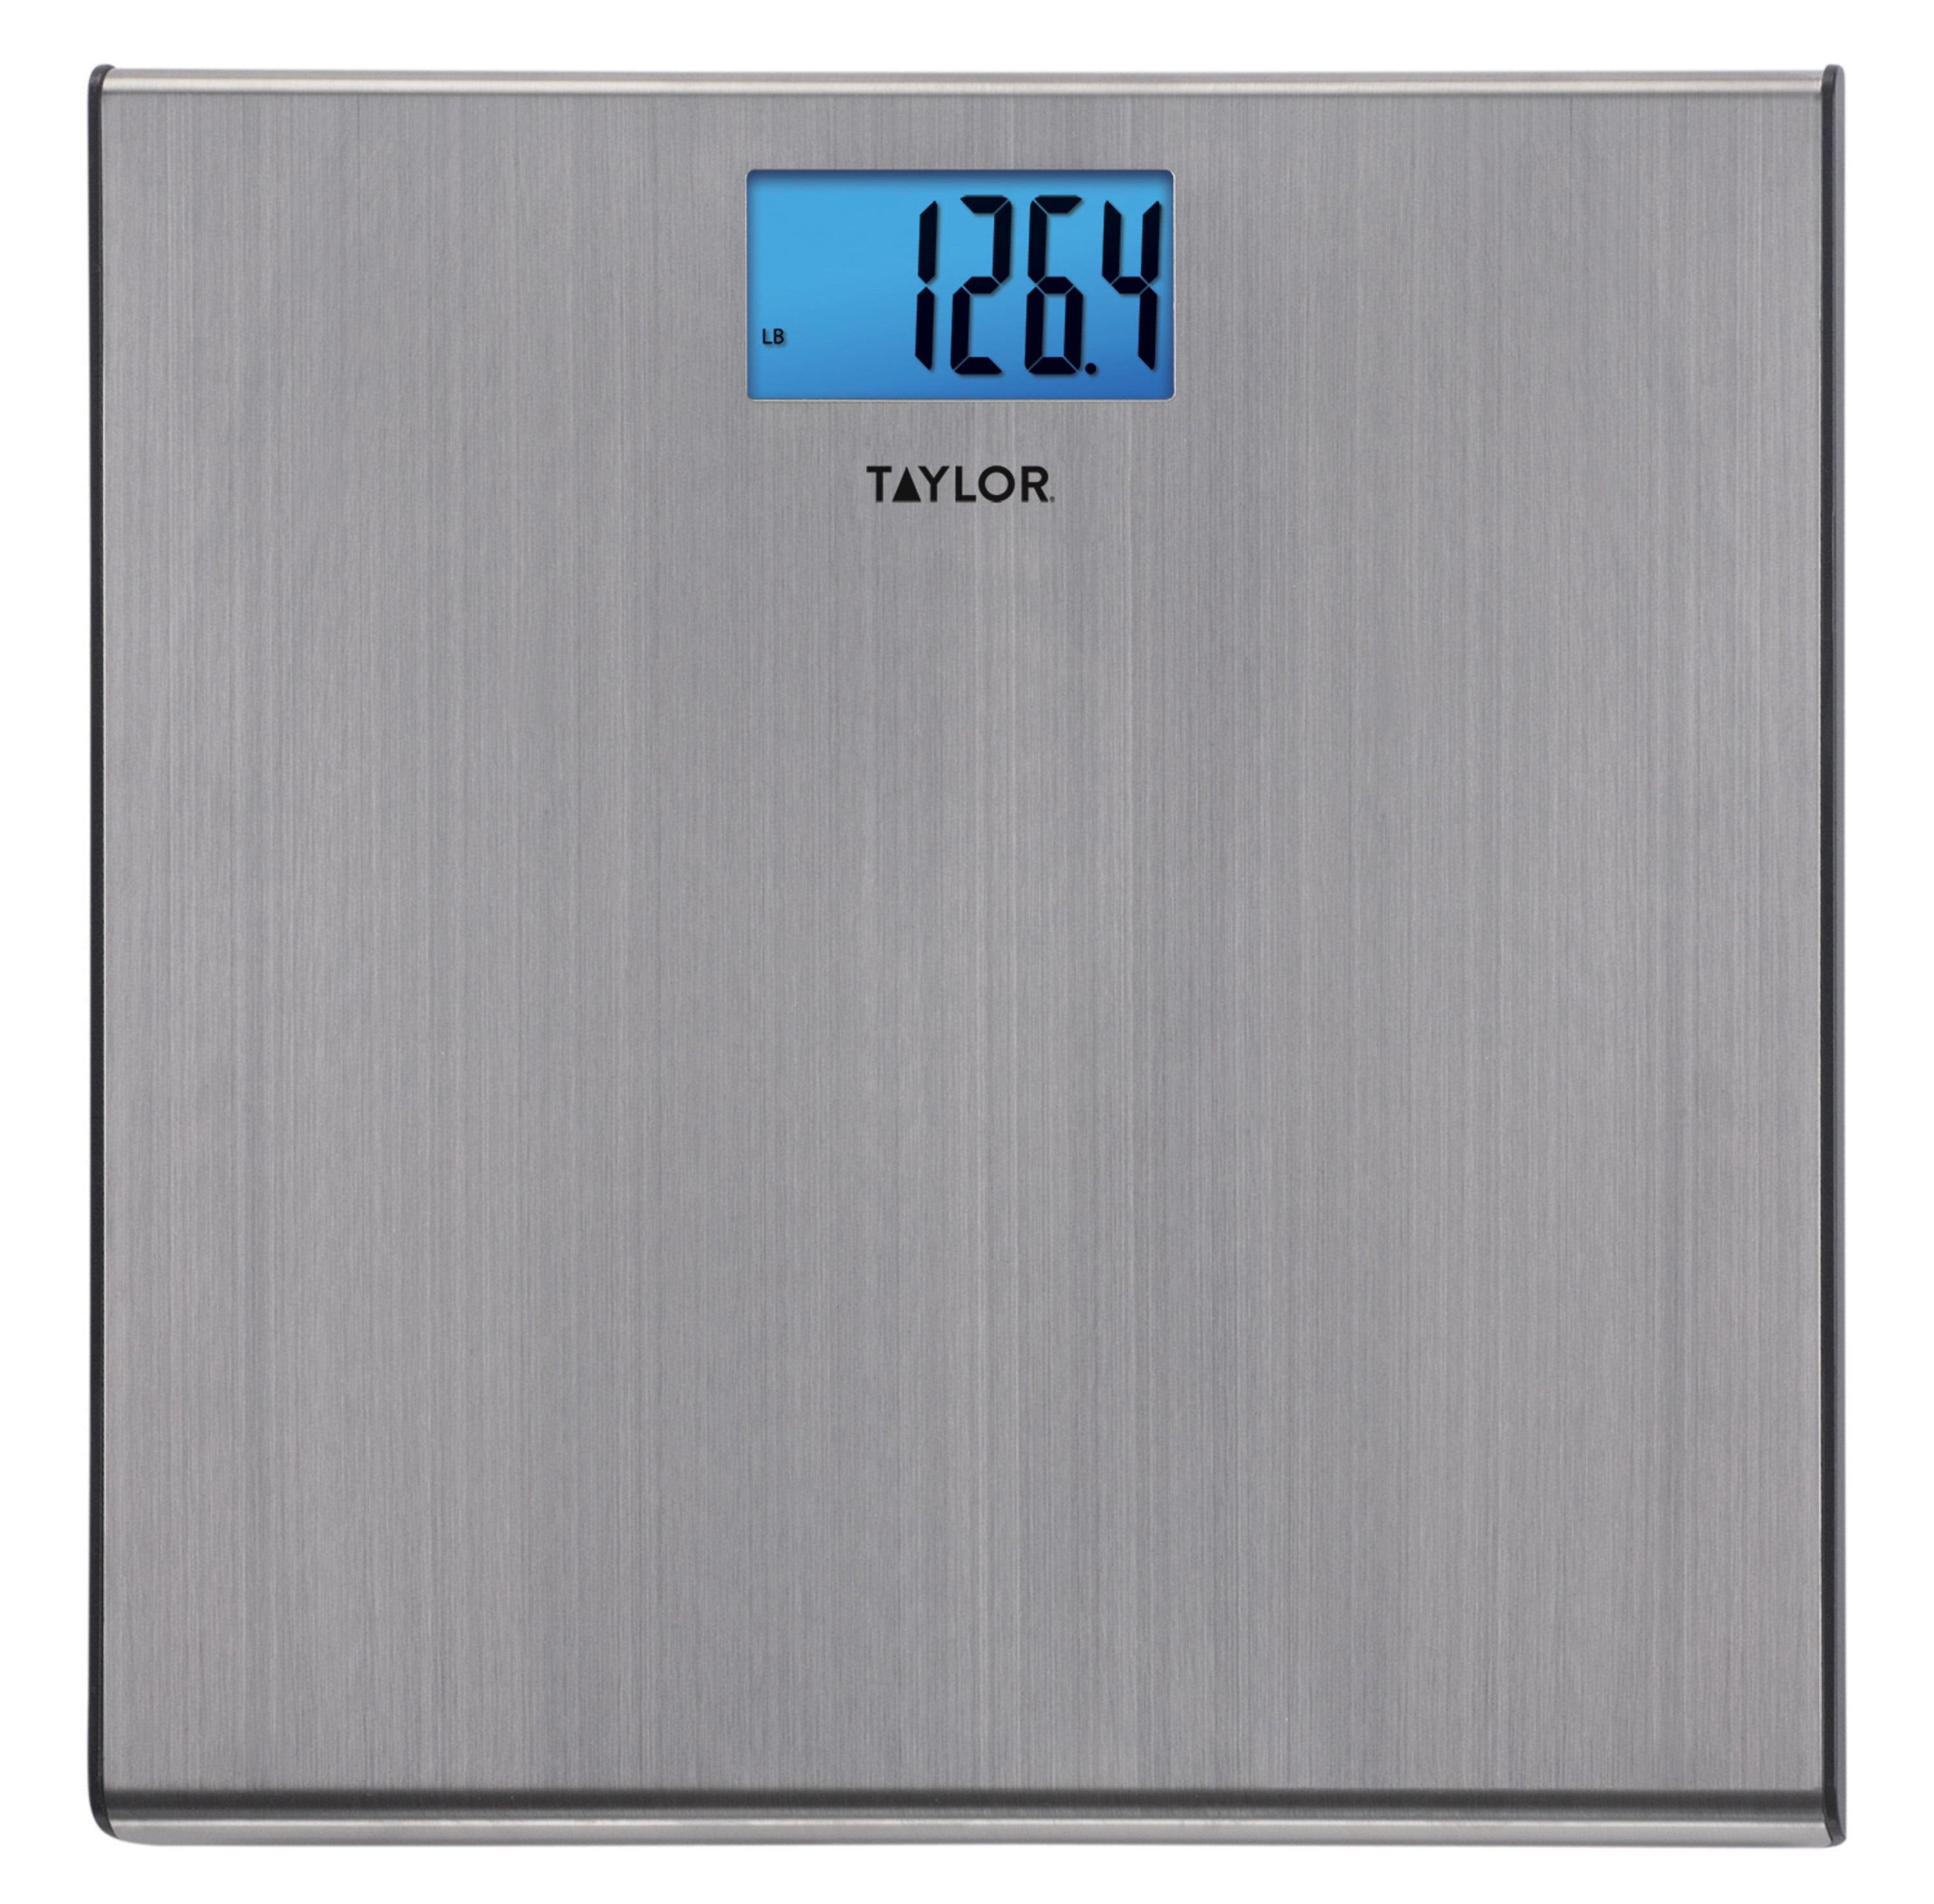 Etekcity Stainless Steel Digital Body Weight Bathroom Scale Step-On Technology 